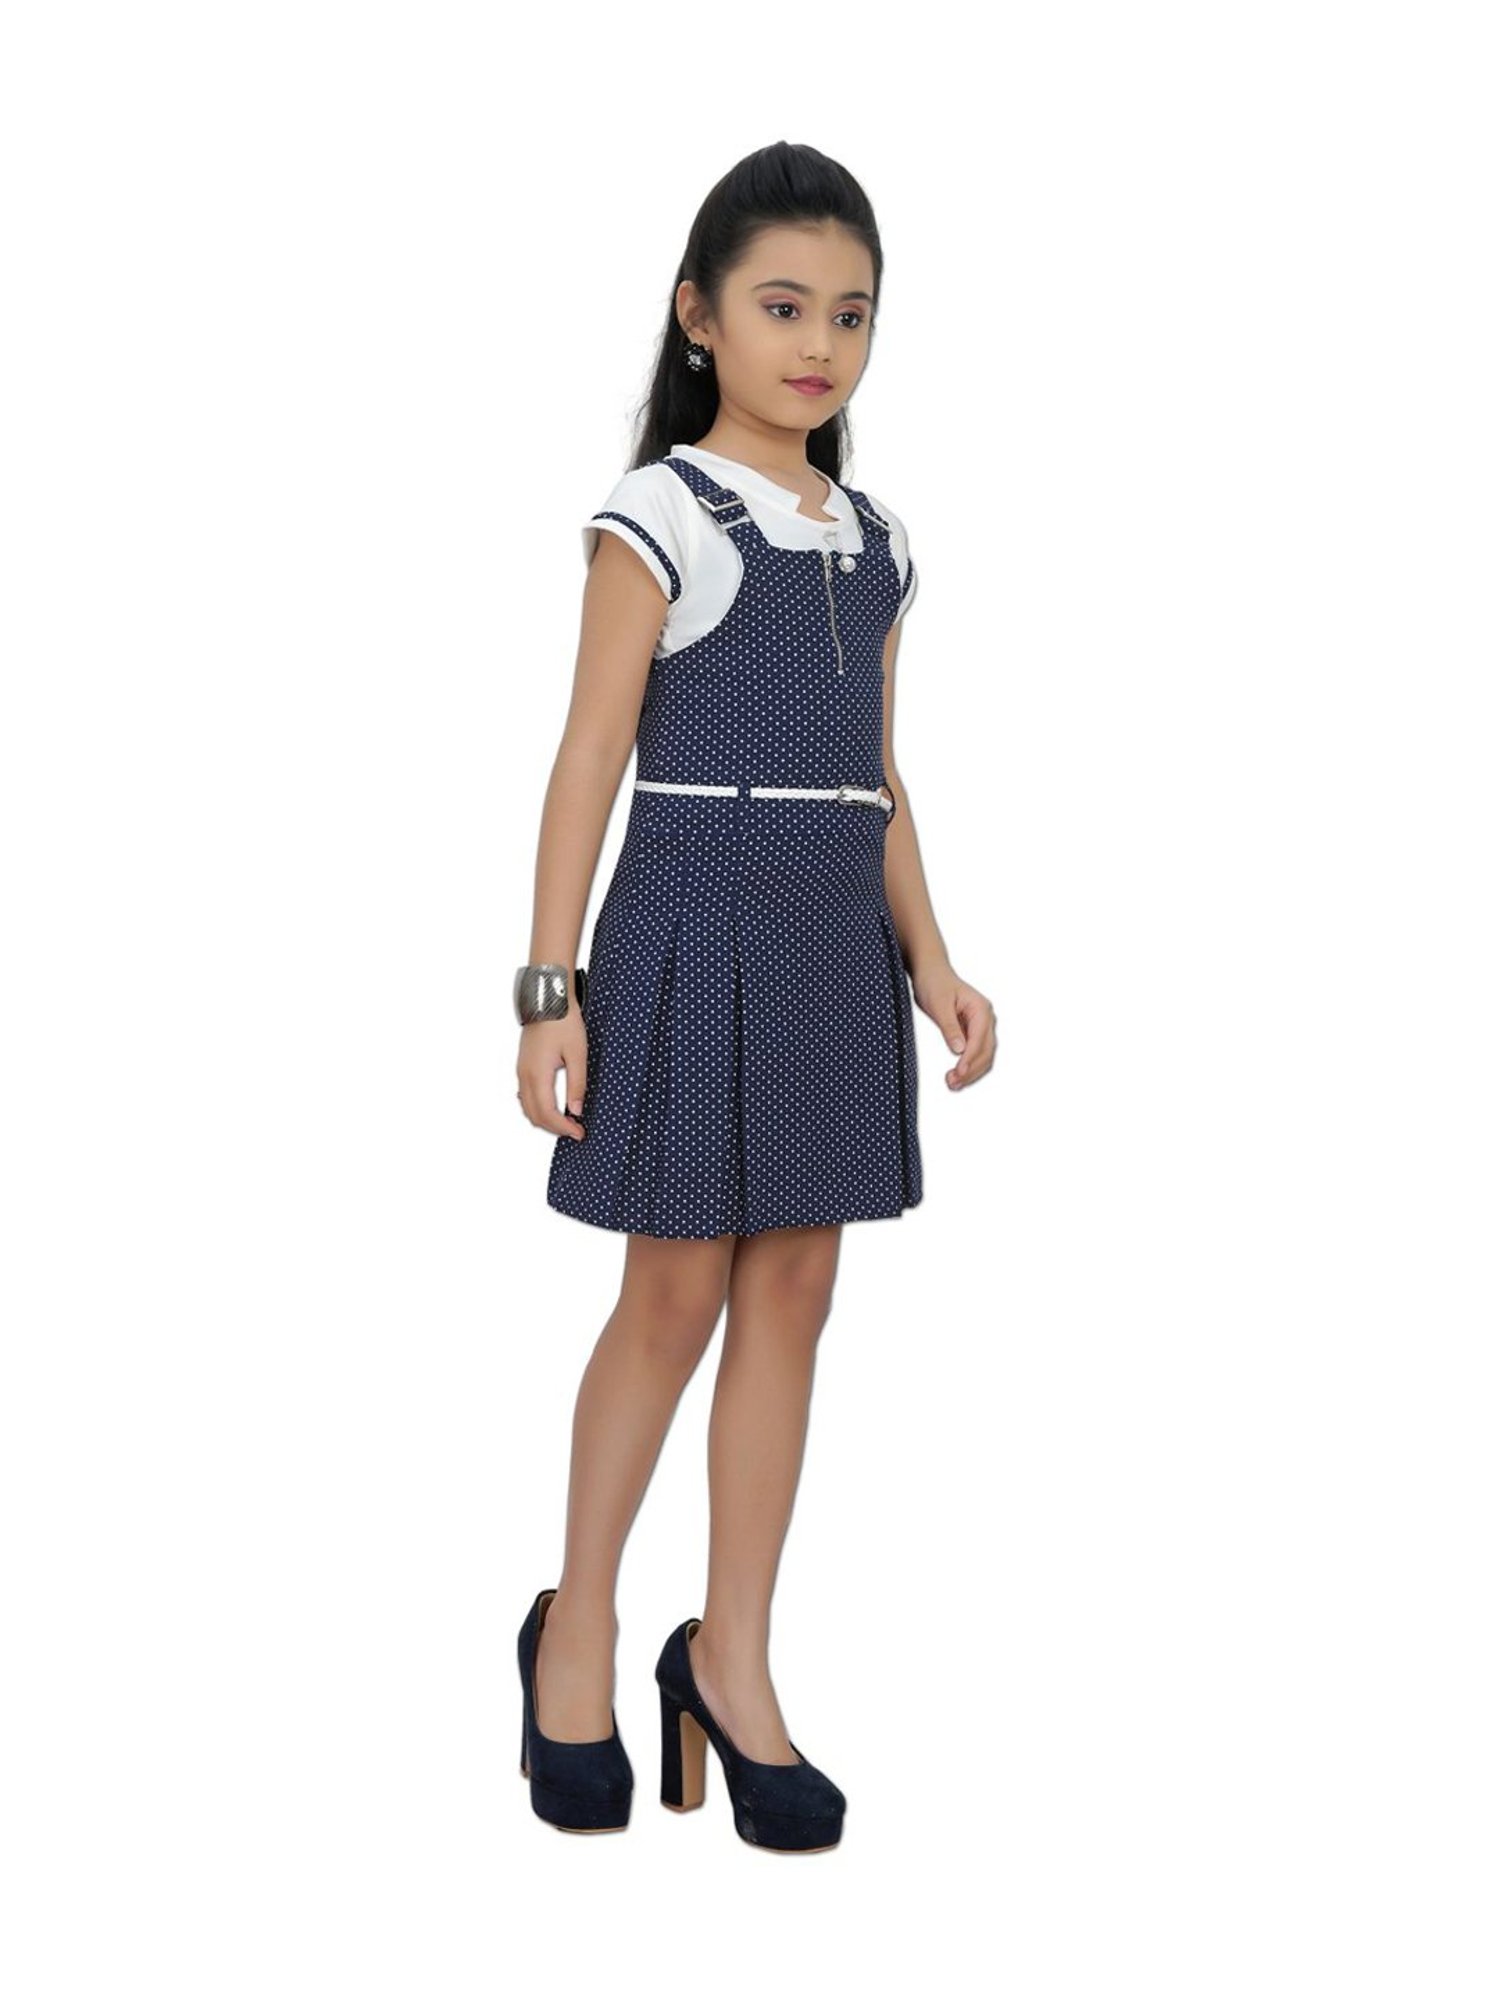 Addressing the Dress Code in Schools - GirlSpring